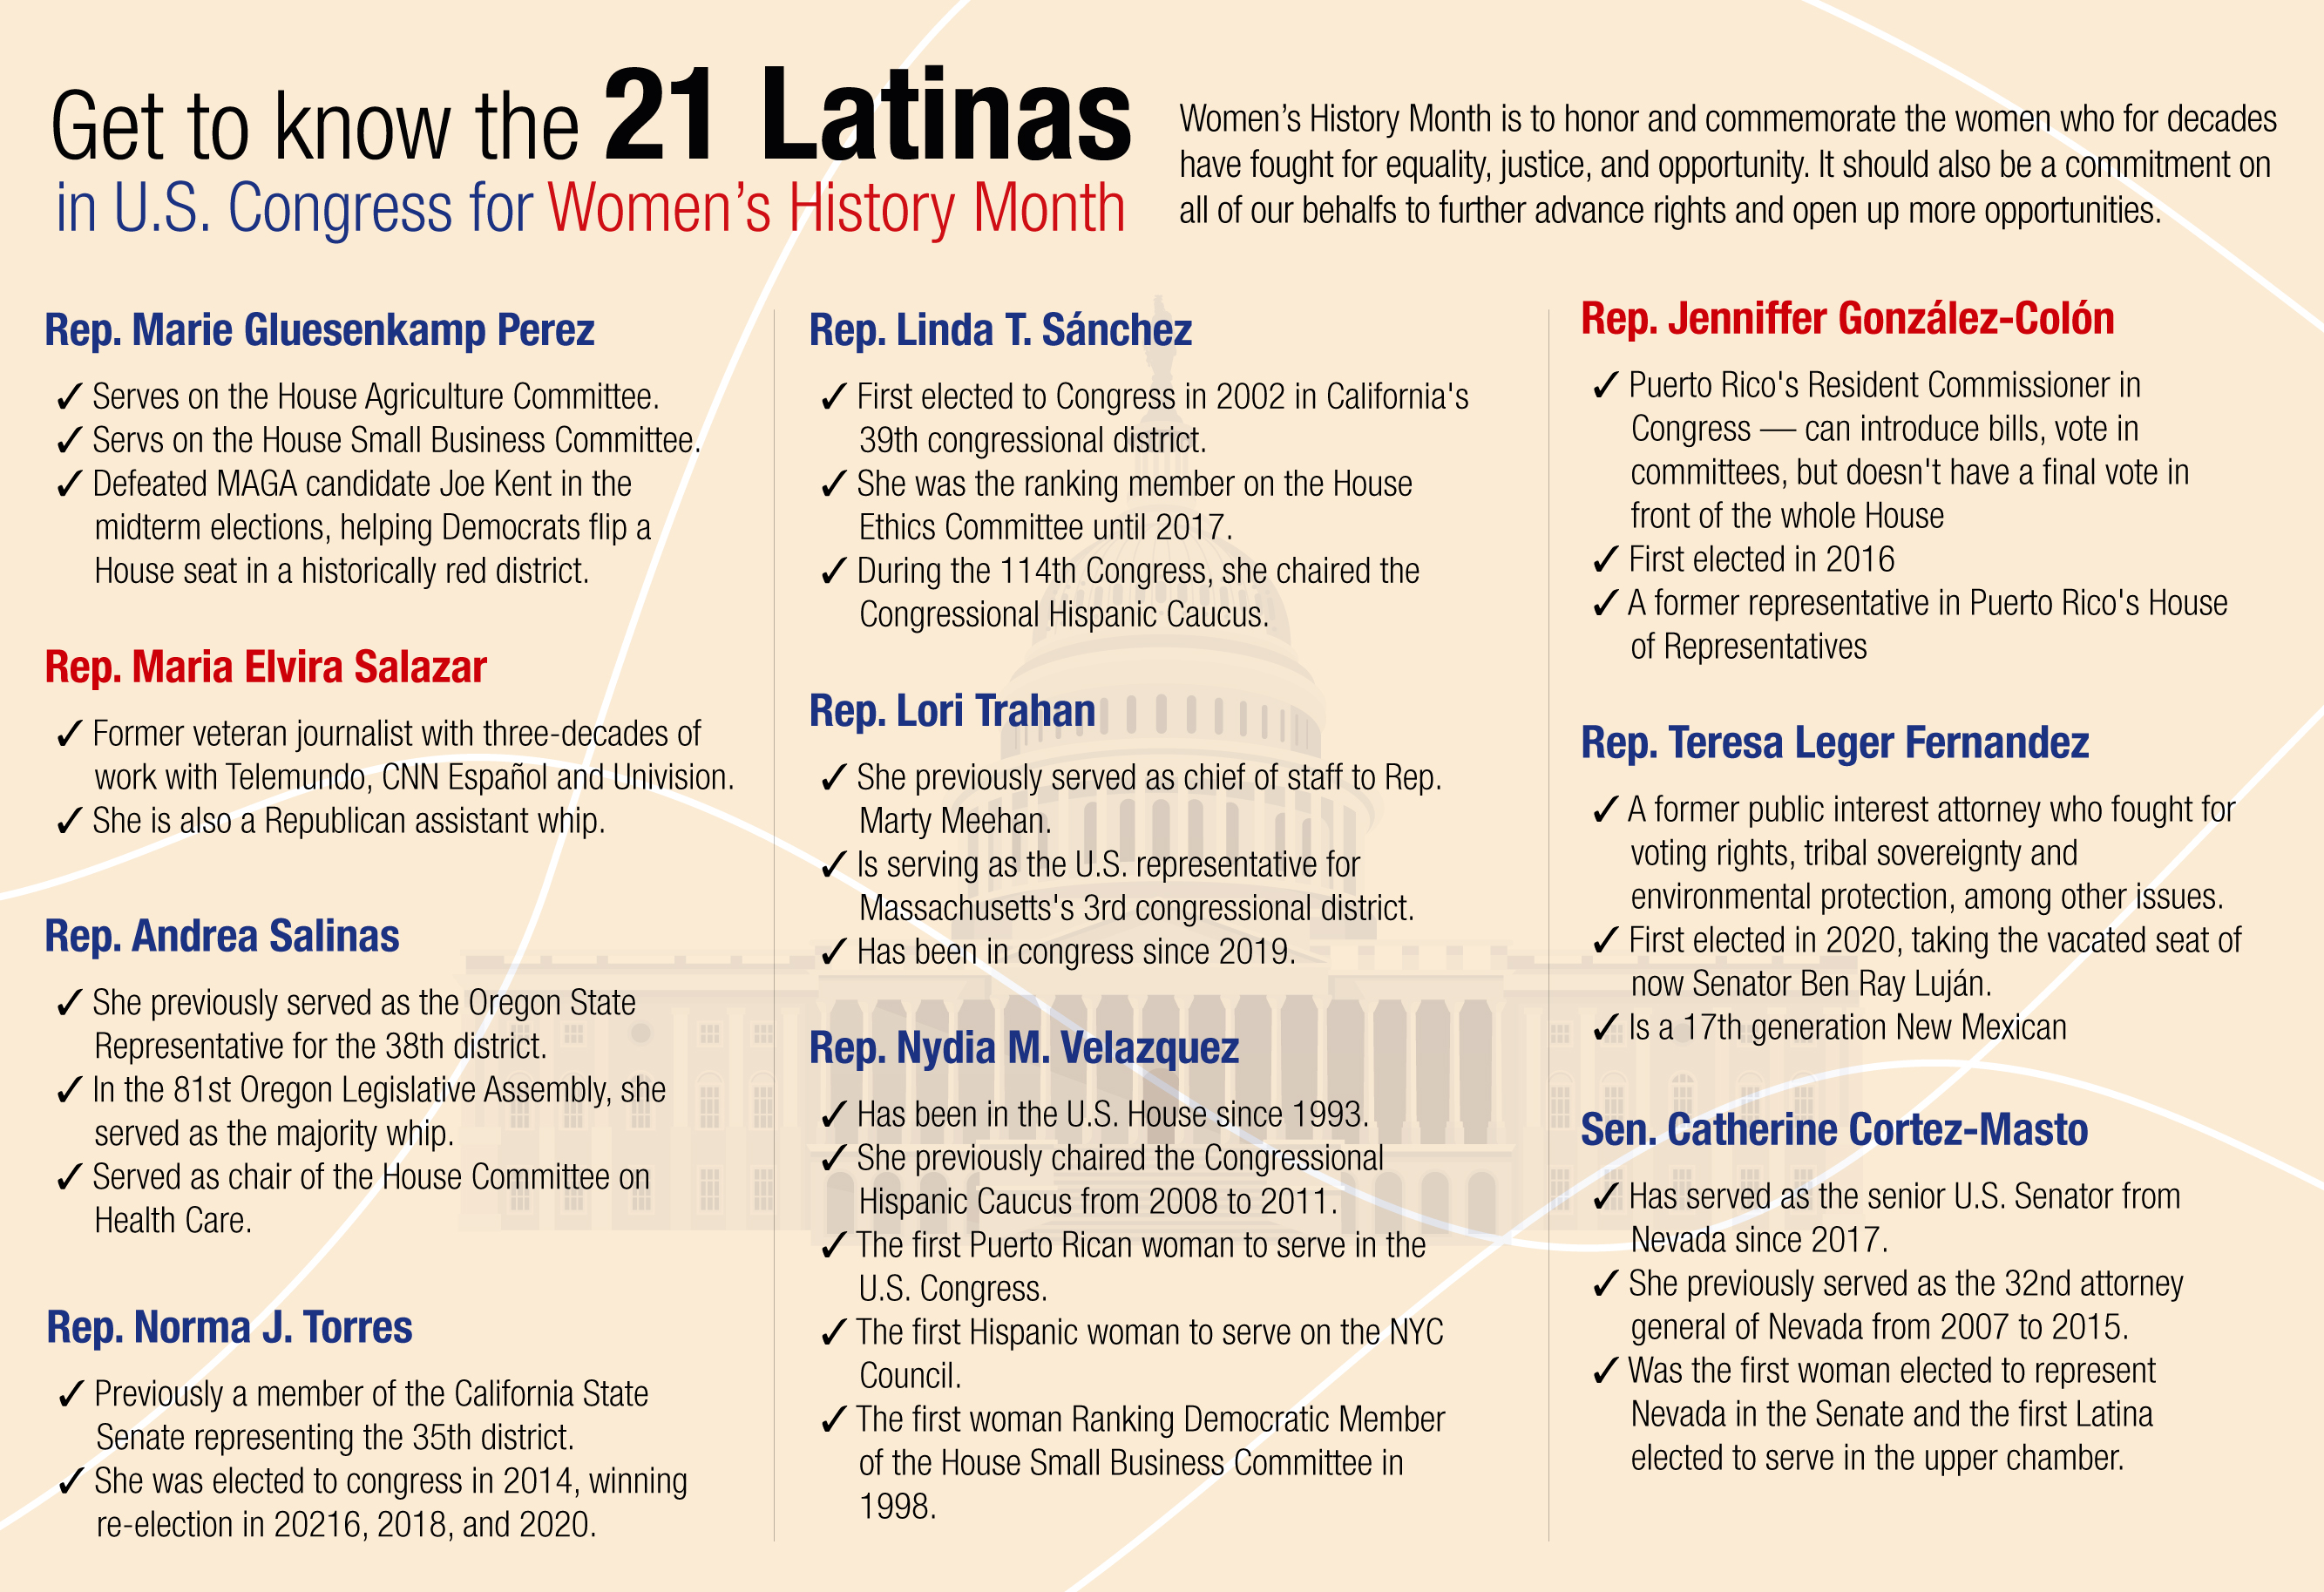 Part 2 of Latinas in Congress